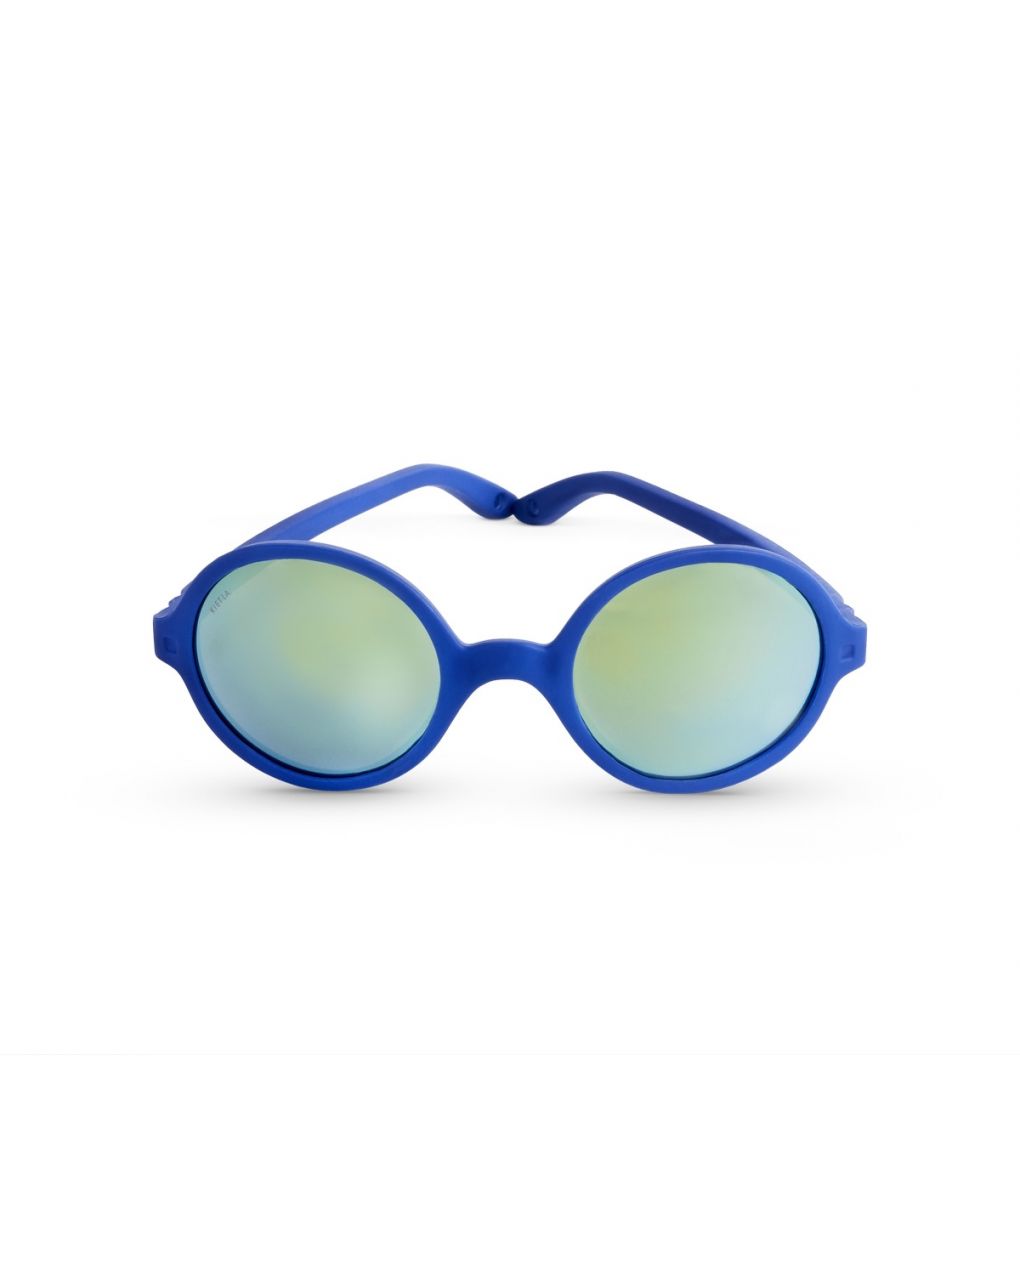 Kietla γυαλιά ηλίου 2-4 ετών rozz reflex blue - kietla